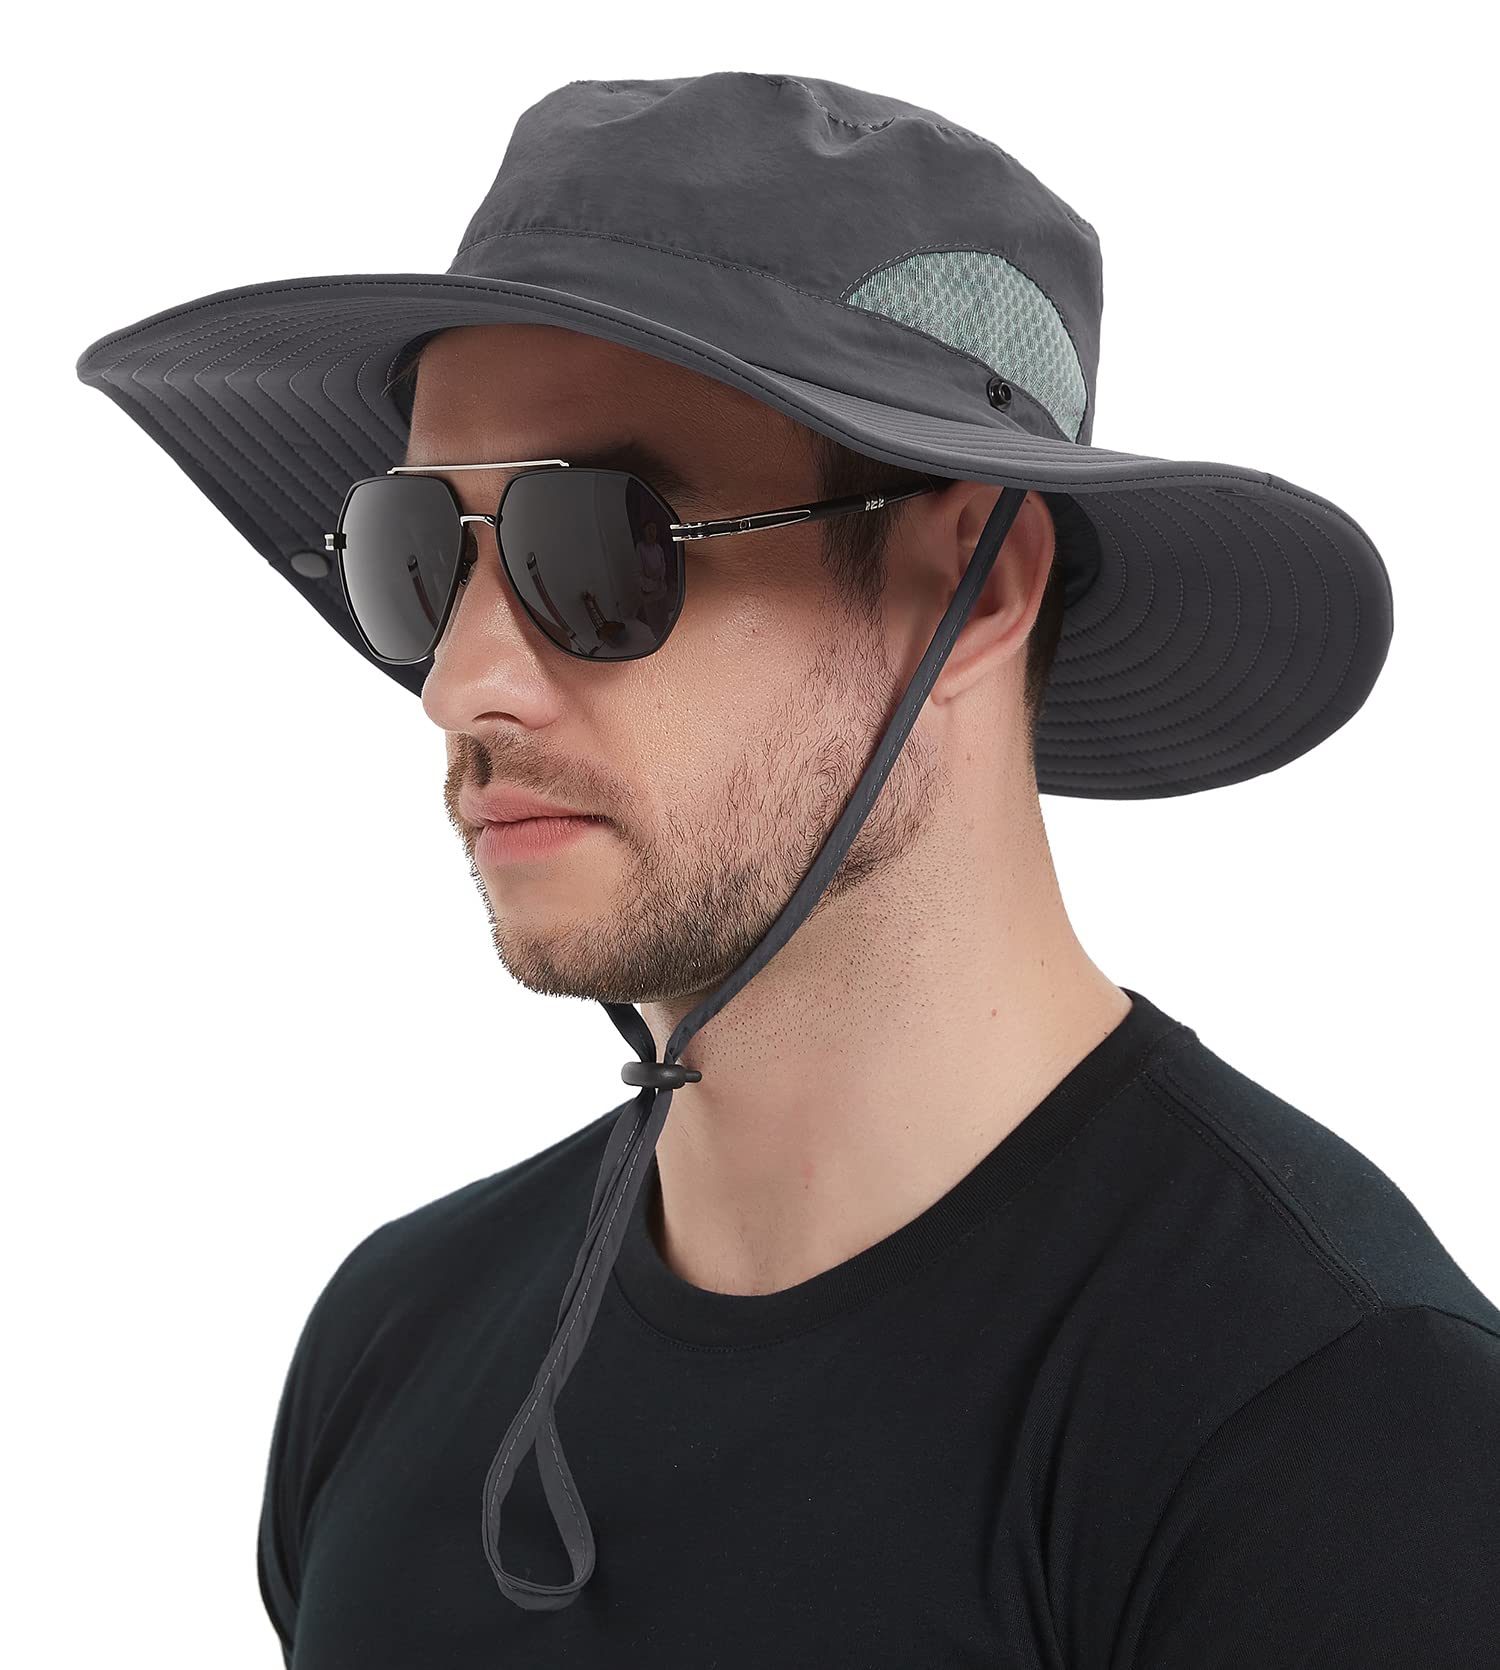 Wmcaps UPF 50+ Sun Protection Hat